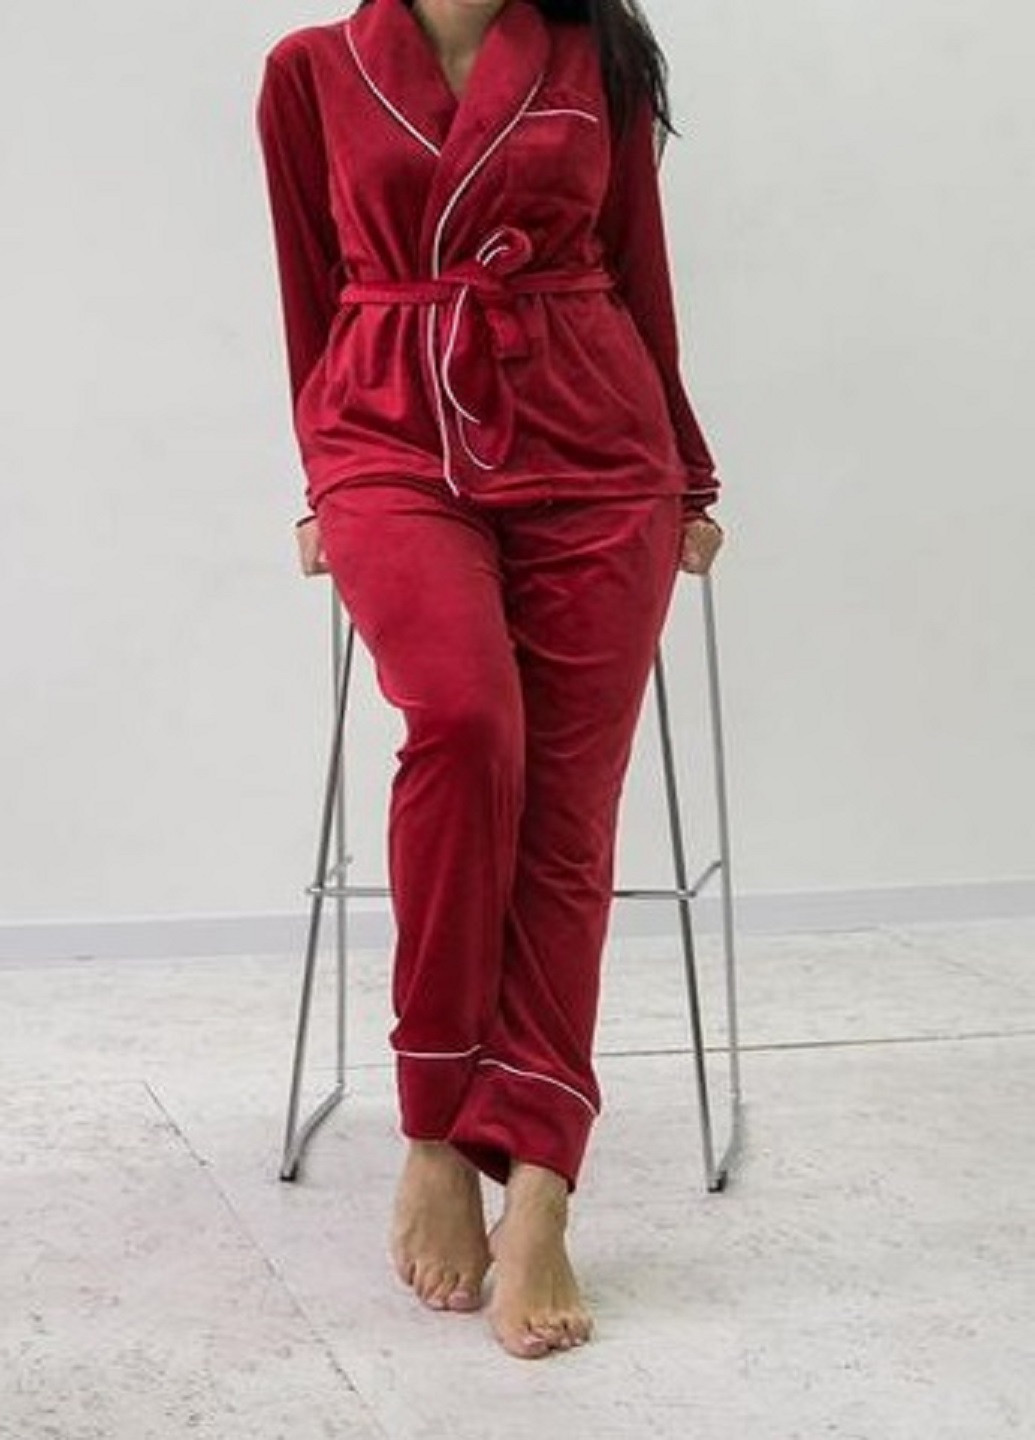 Темно-красная всесезон велюровая пижама - домашний костюм Fashion Club